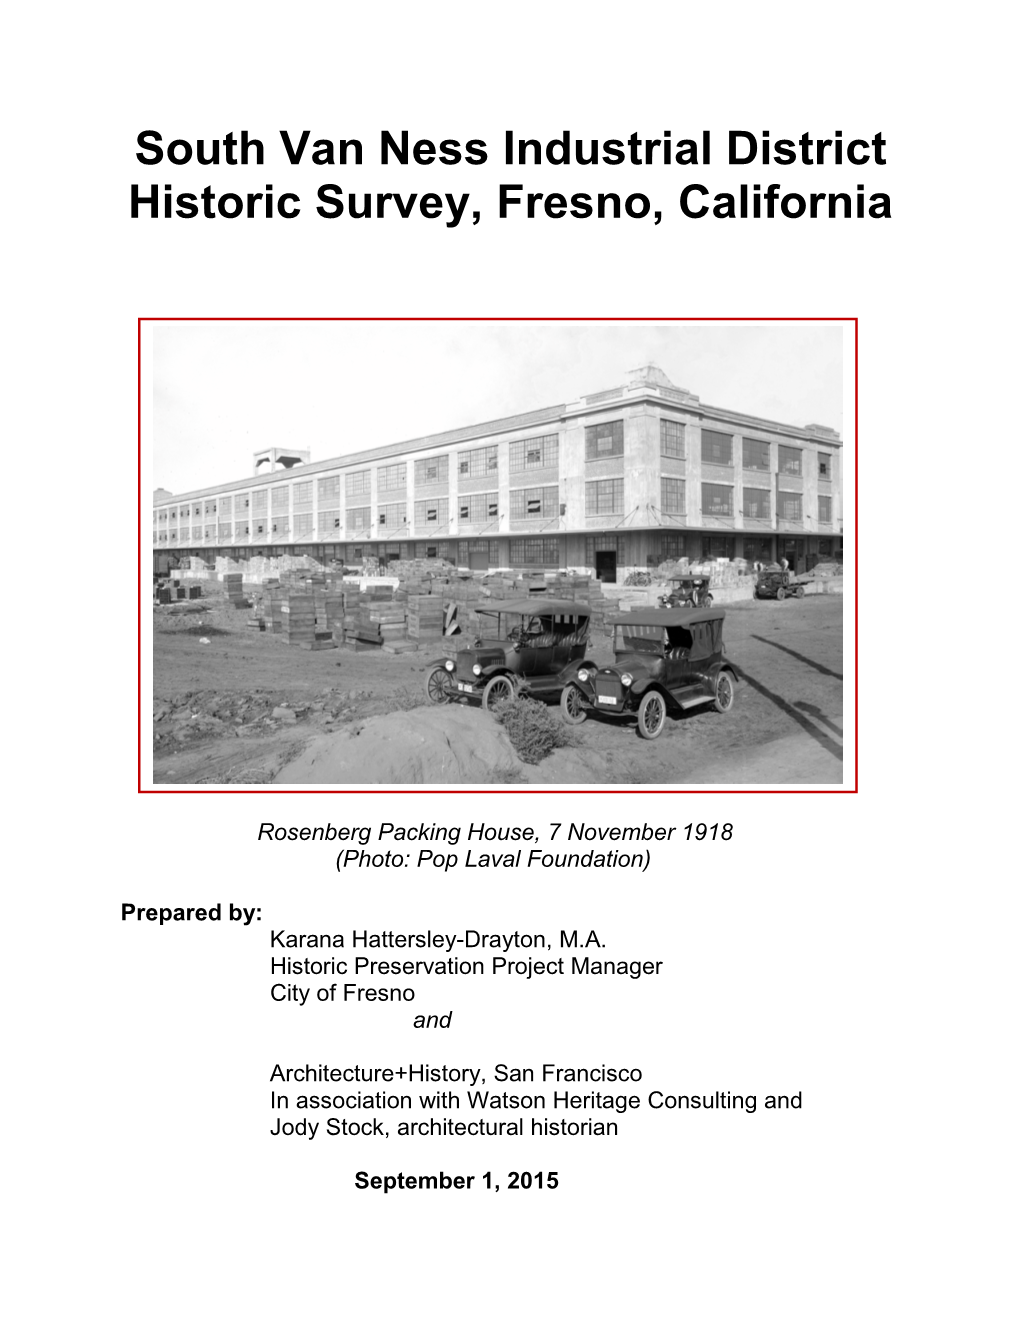 South Van Ness Industrial District Historic Survey, Fresno, California